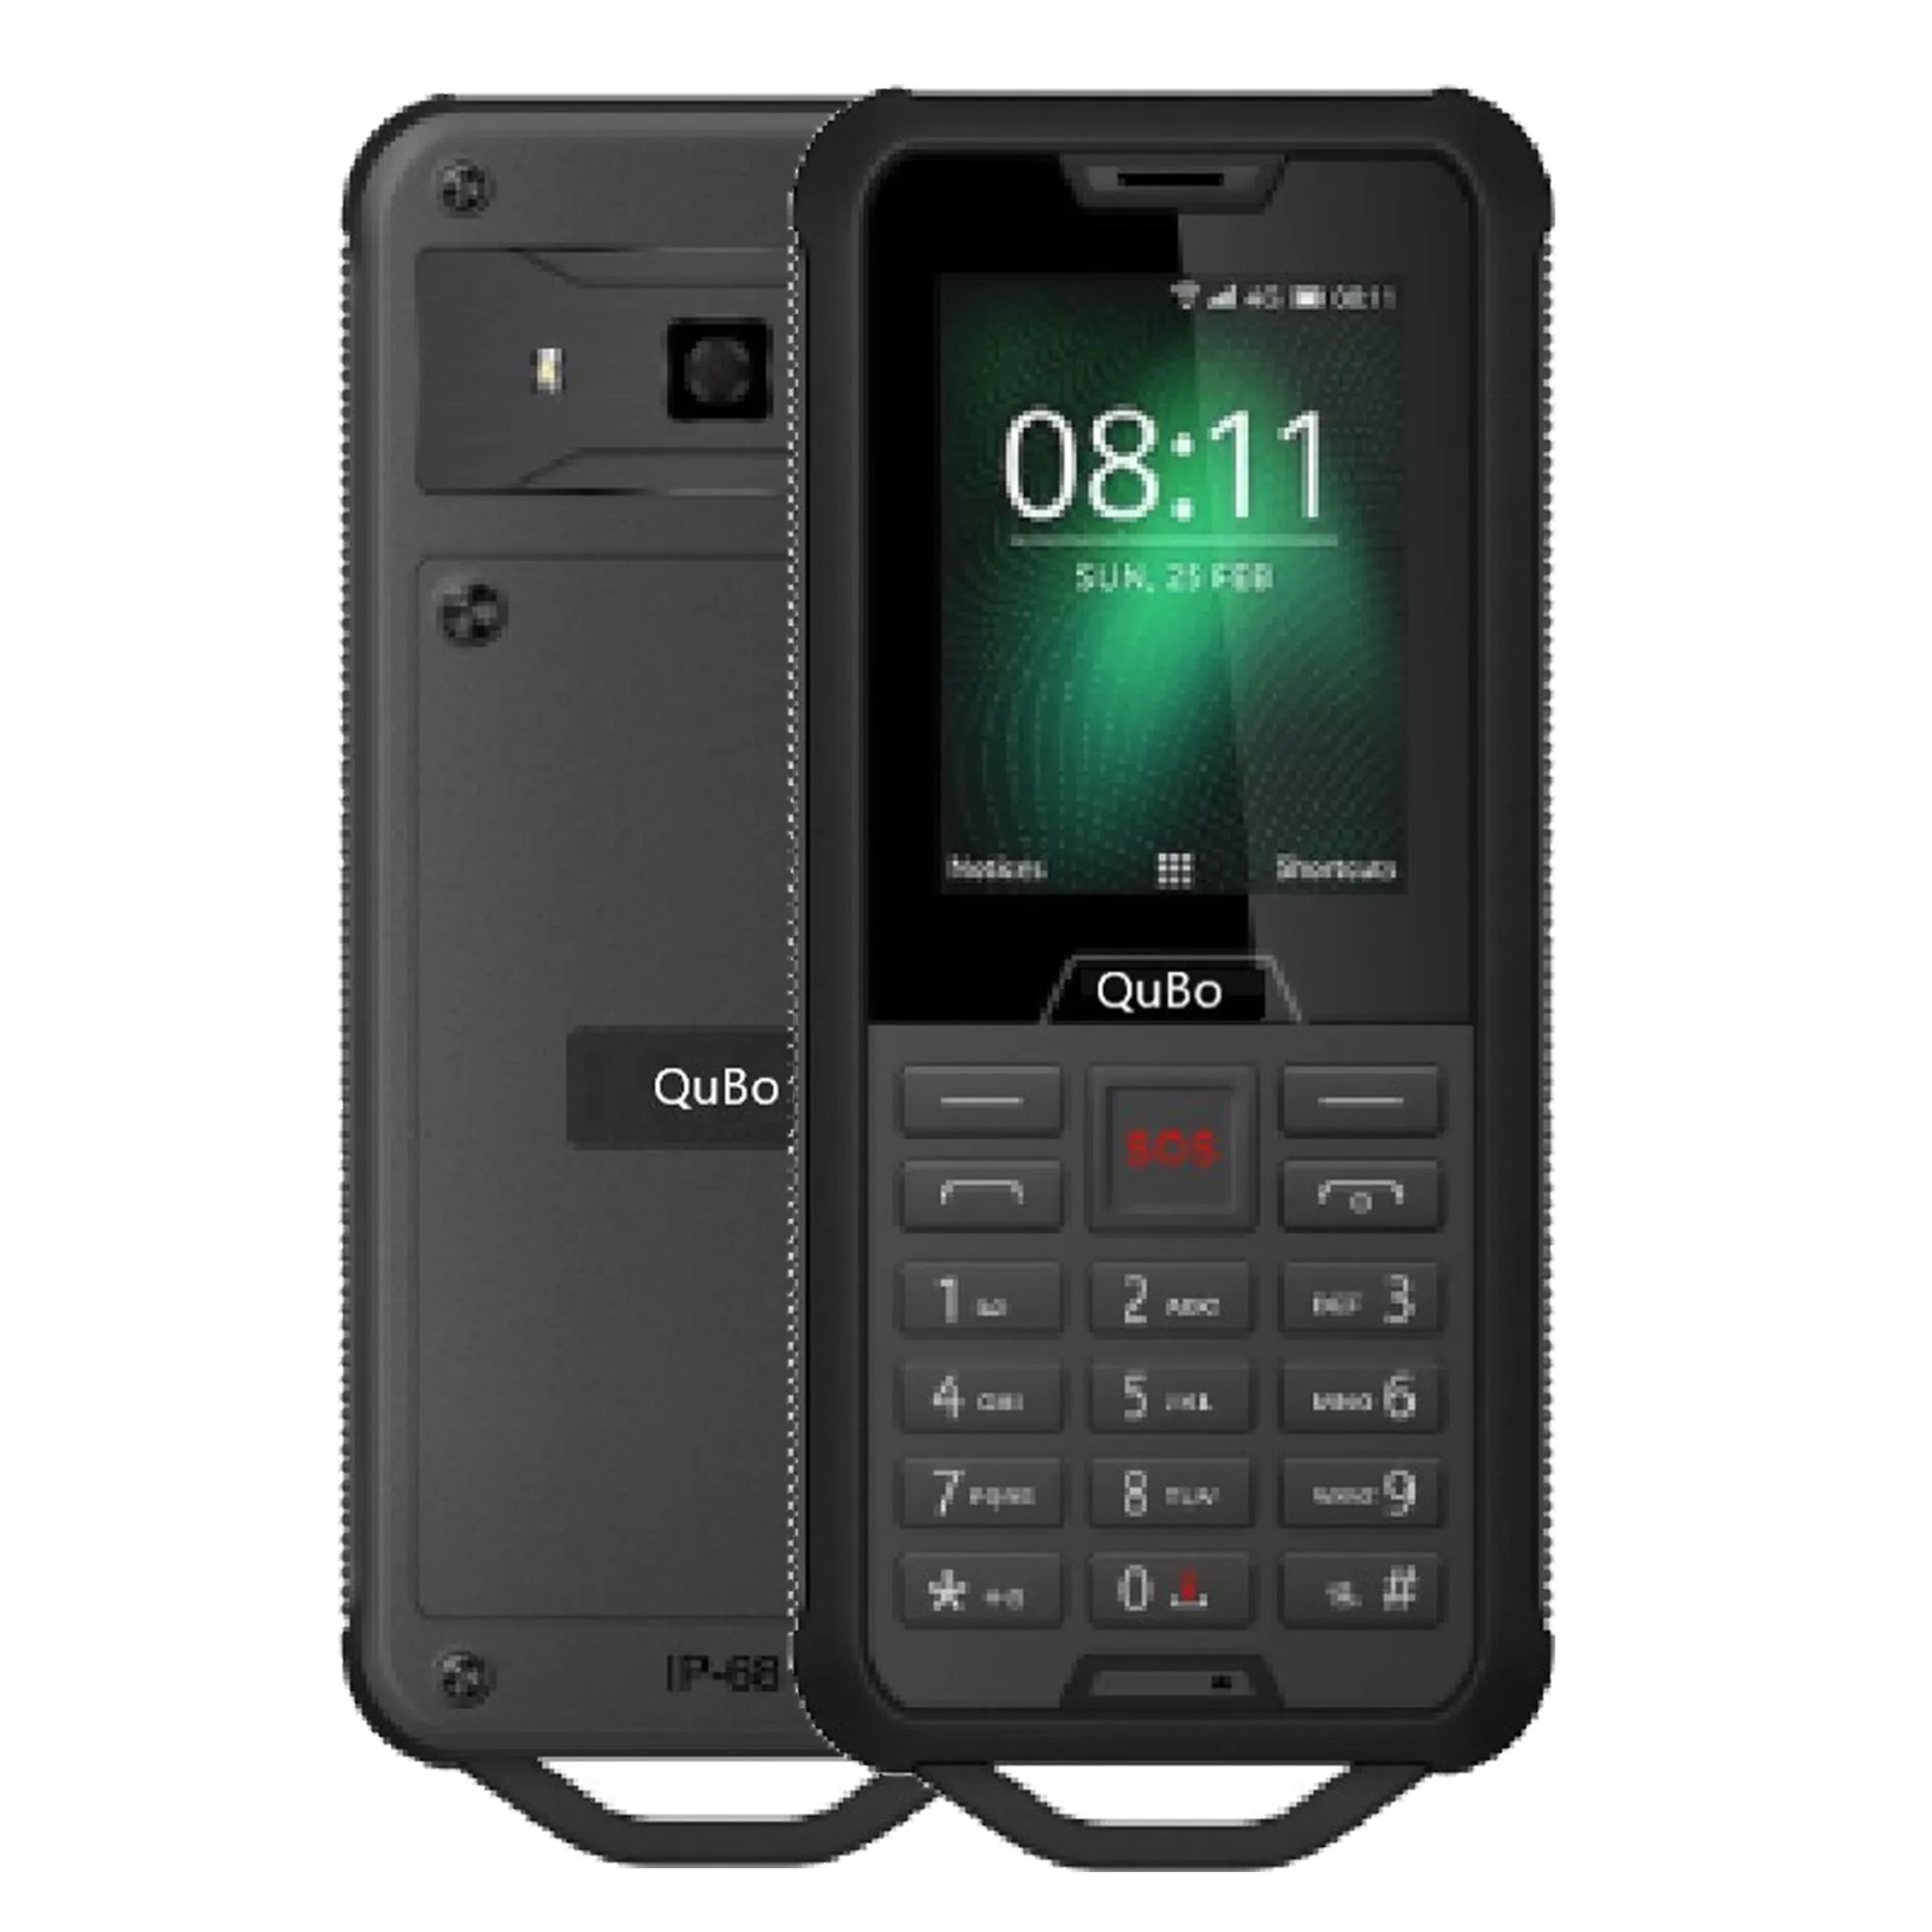 2.4 inch unlock dual SIM slim IP68 rugged waterproof 2G bar feature mobile phone